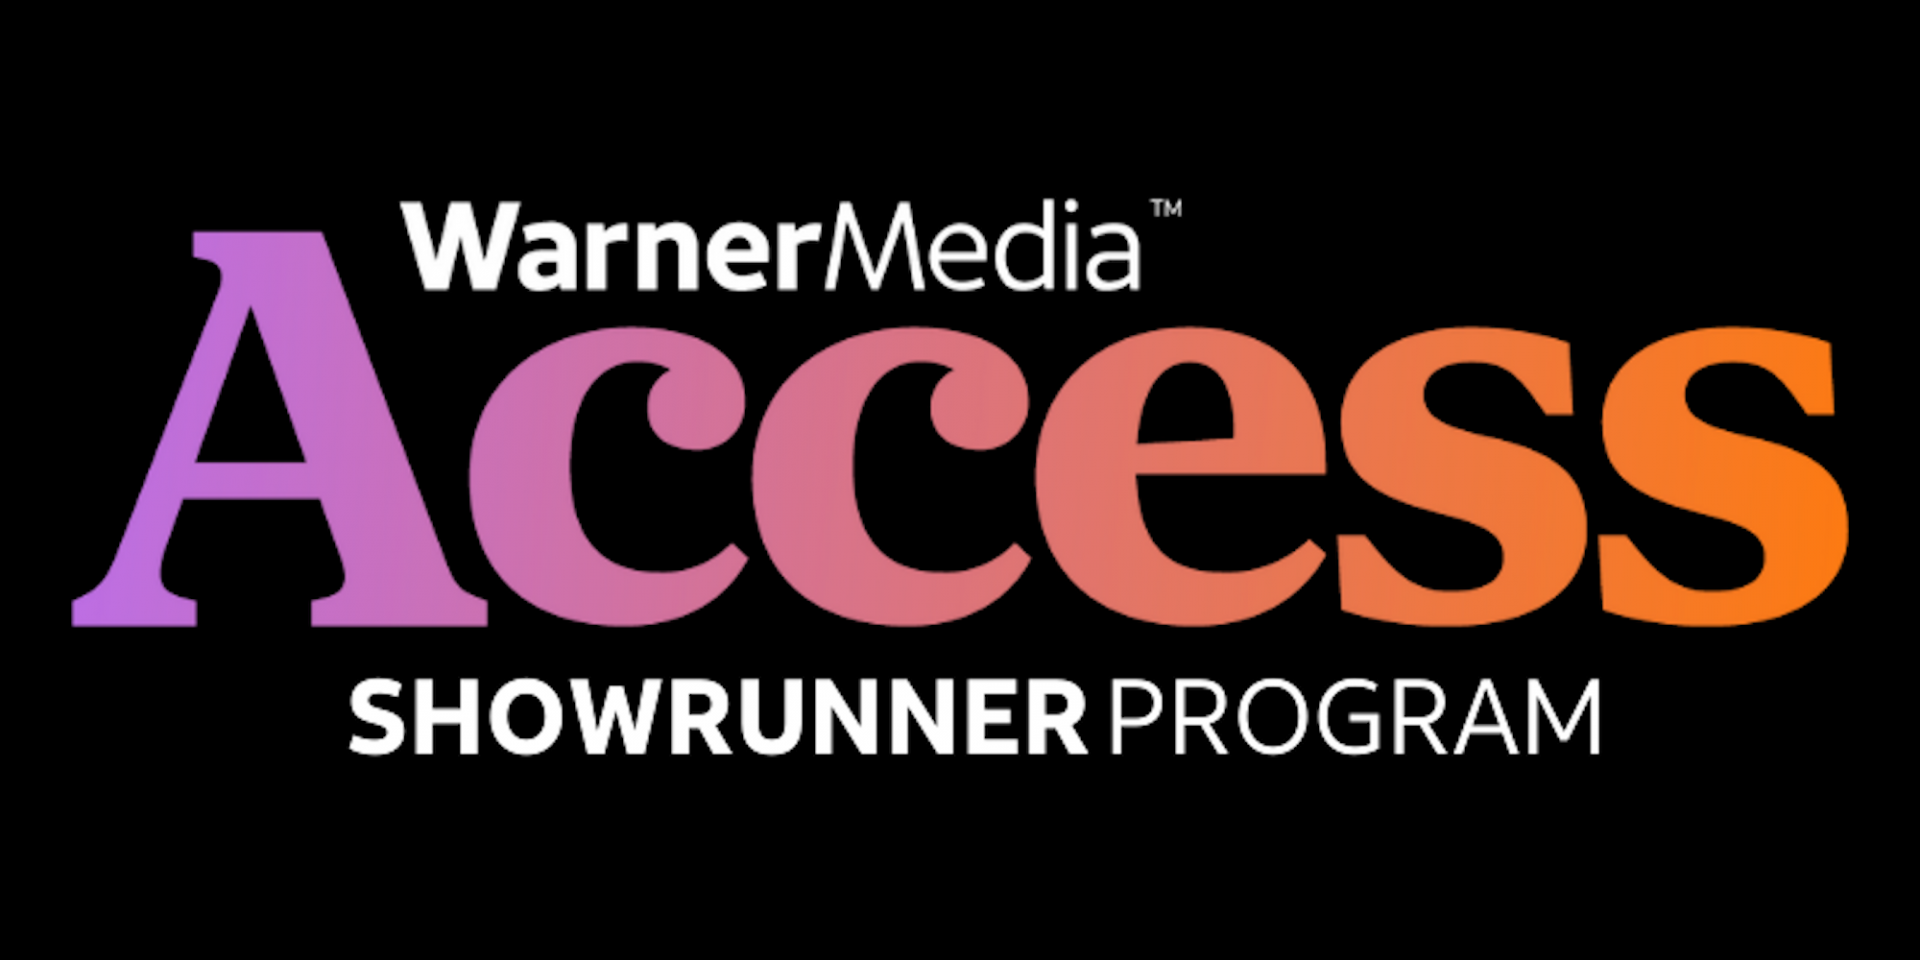 WarnerMedia Access Showrunner Program logo.